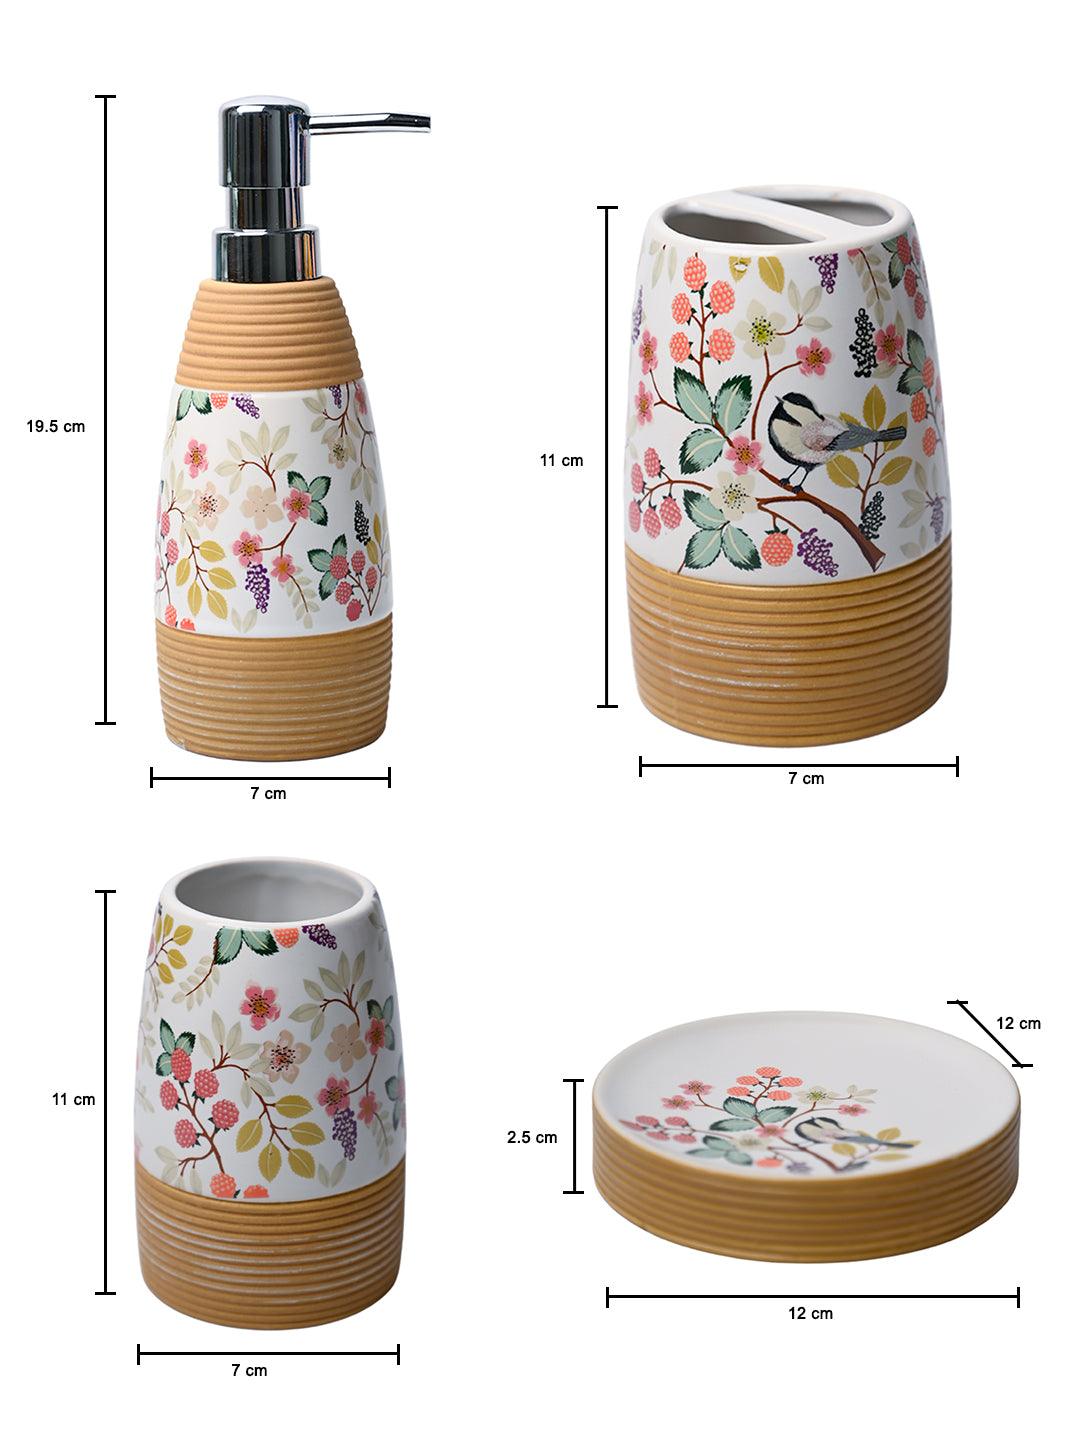 Multicolor Ceramic Cylindrical Bathroom Set Of 4 - Floral Design, Bath Accessories